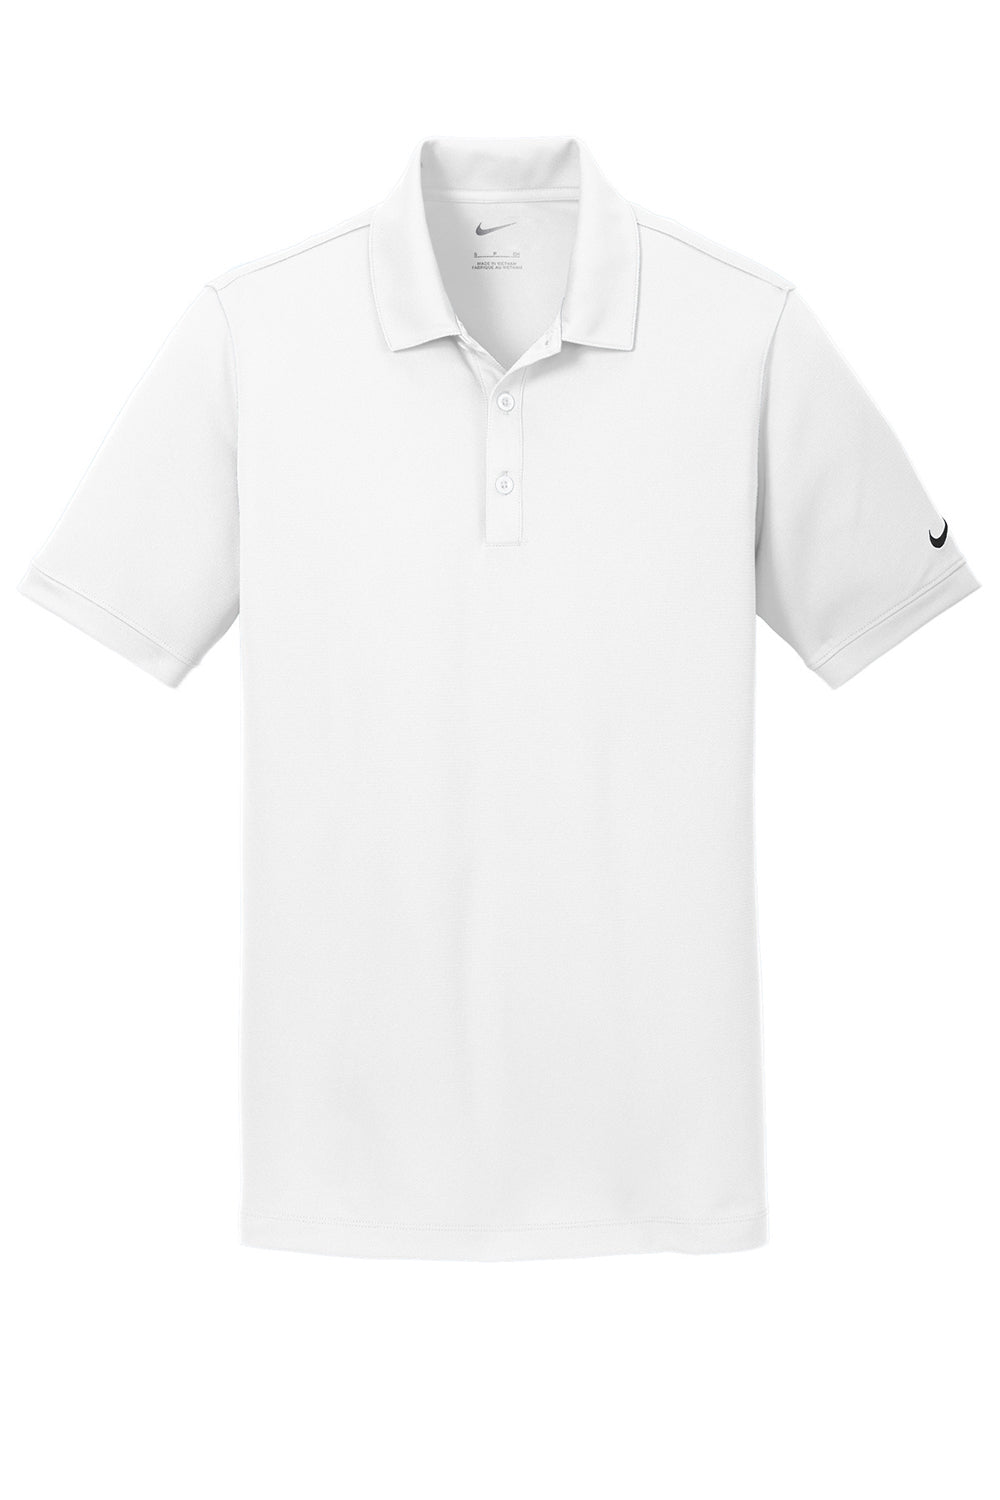 Nike 746099 Mens Icon Dri-Fit Moisture Wicking Short Sleeve Polo Shirt White Flat Front